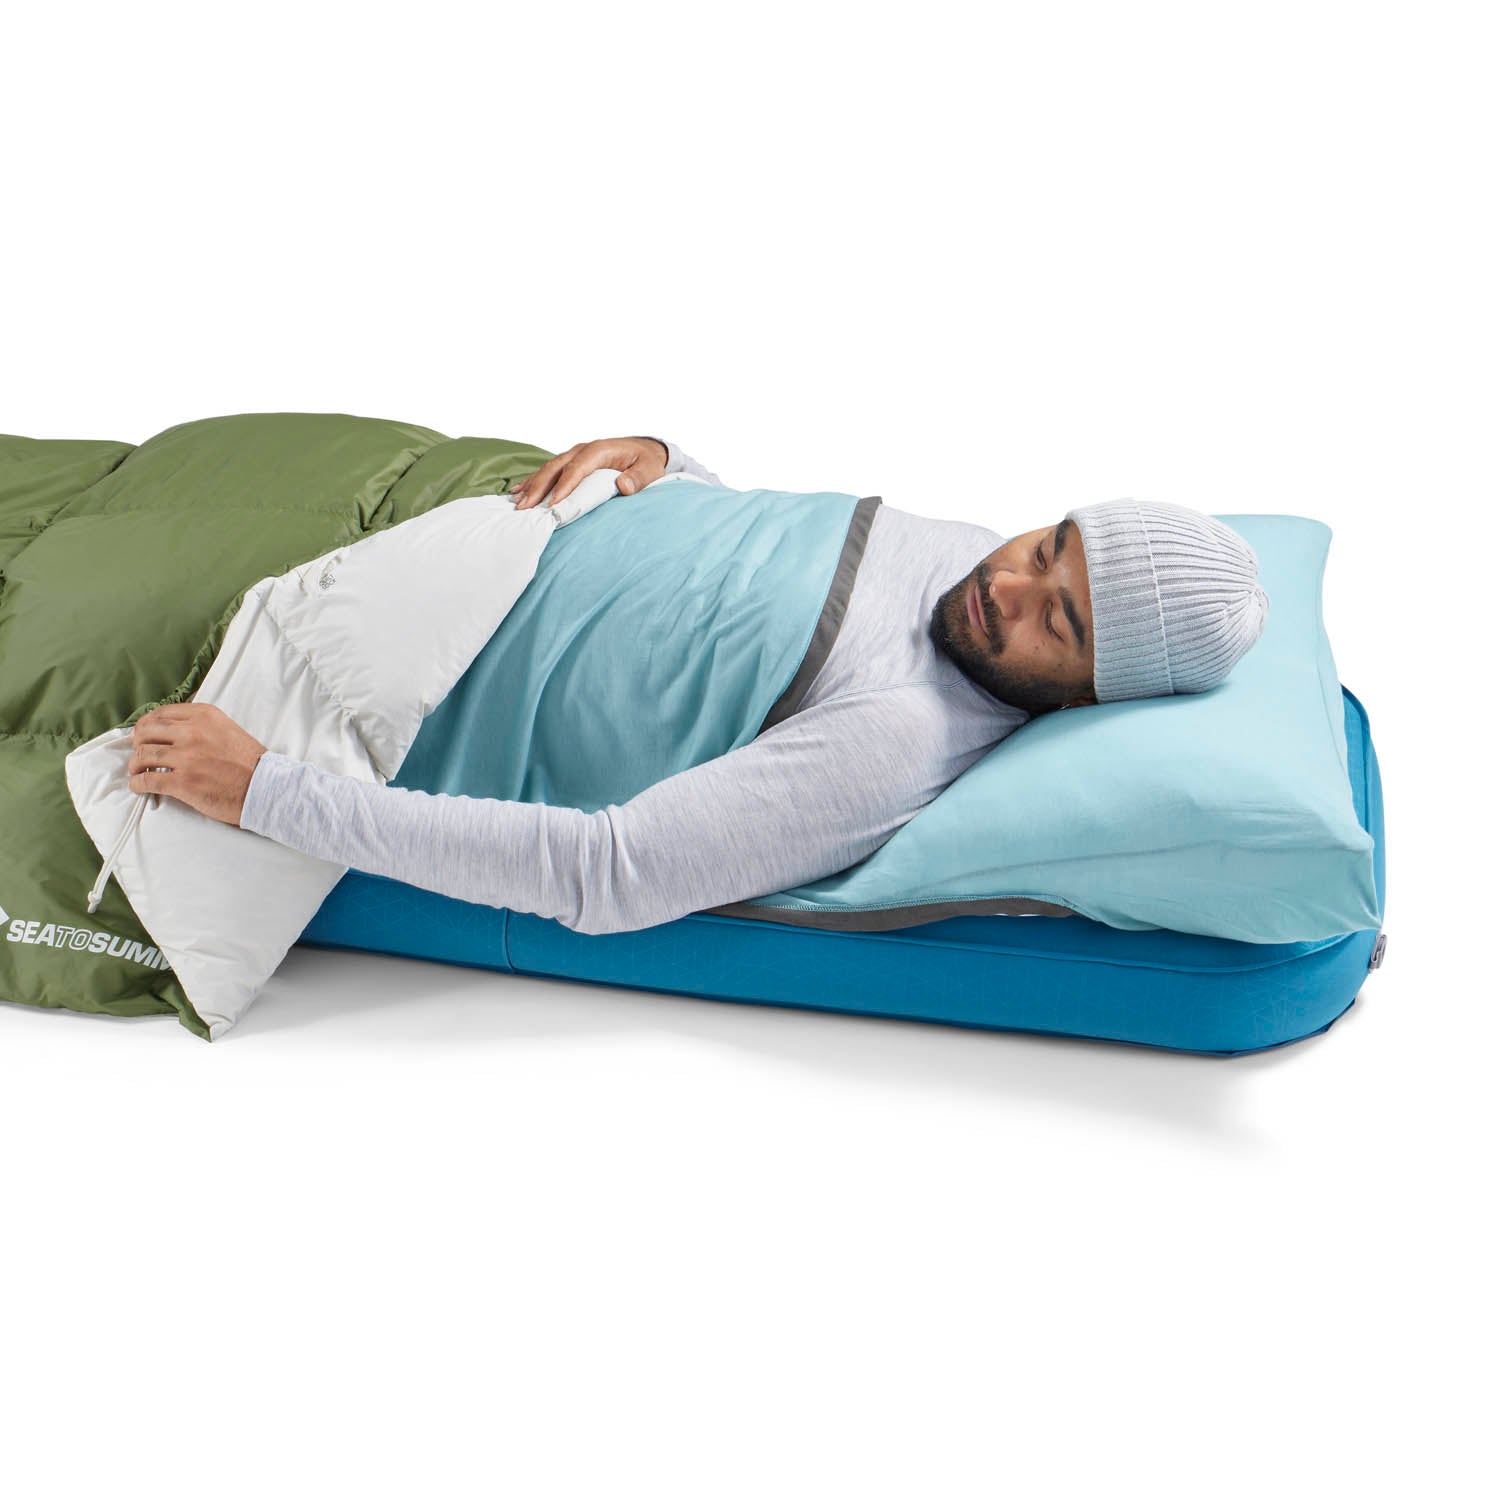 Tanami Down Comforter (45°F)